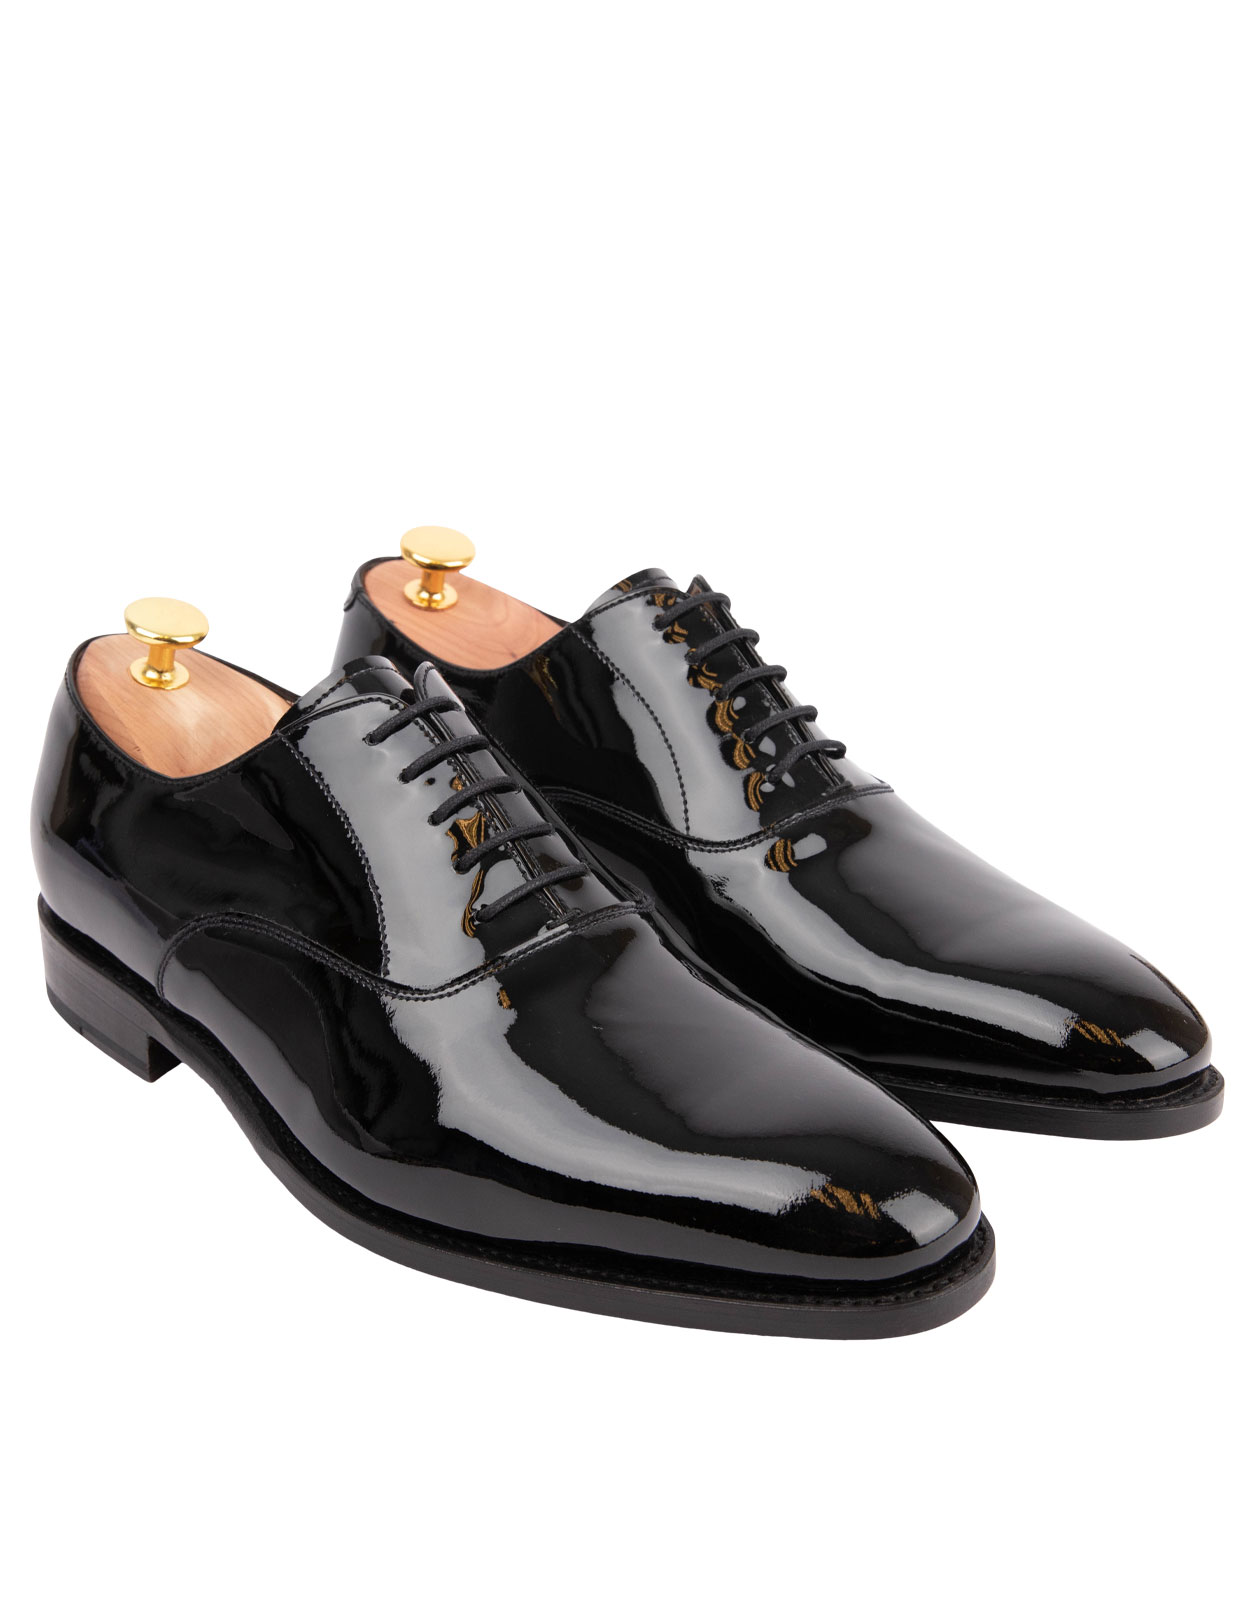 Patent Leather Oxford Shoe Black Stl 8.5